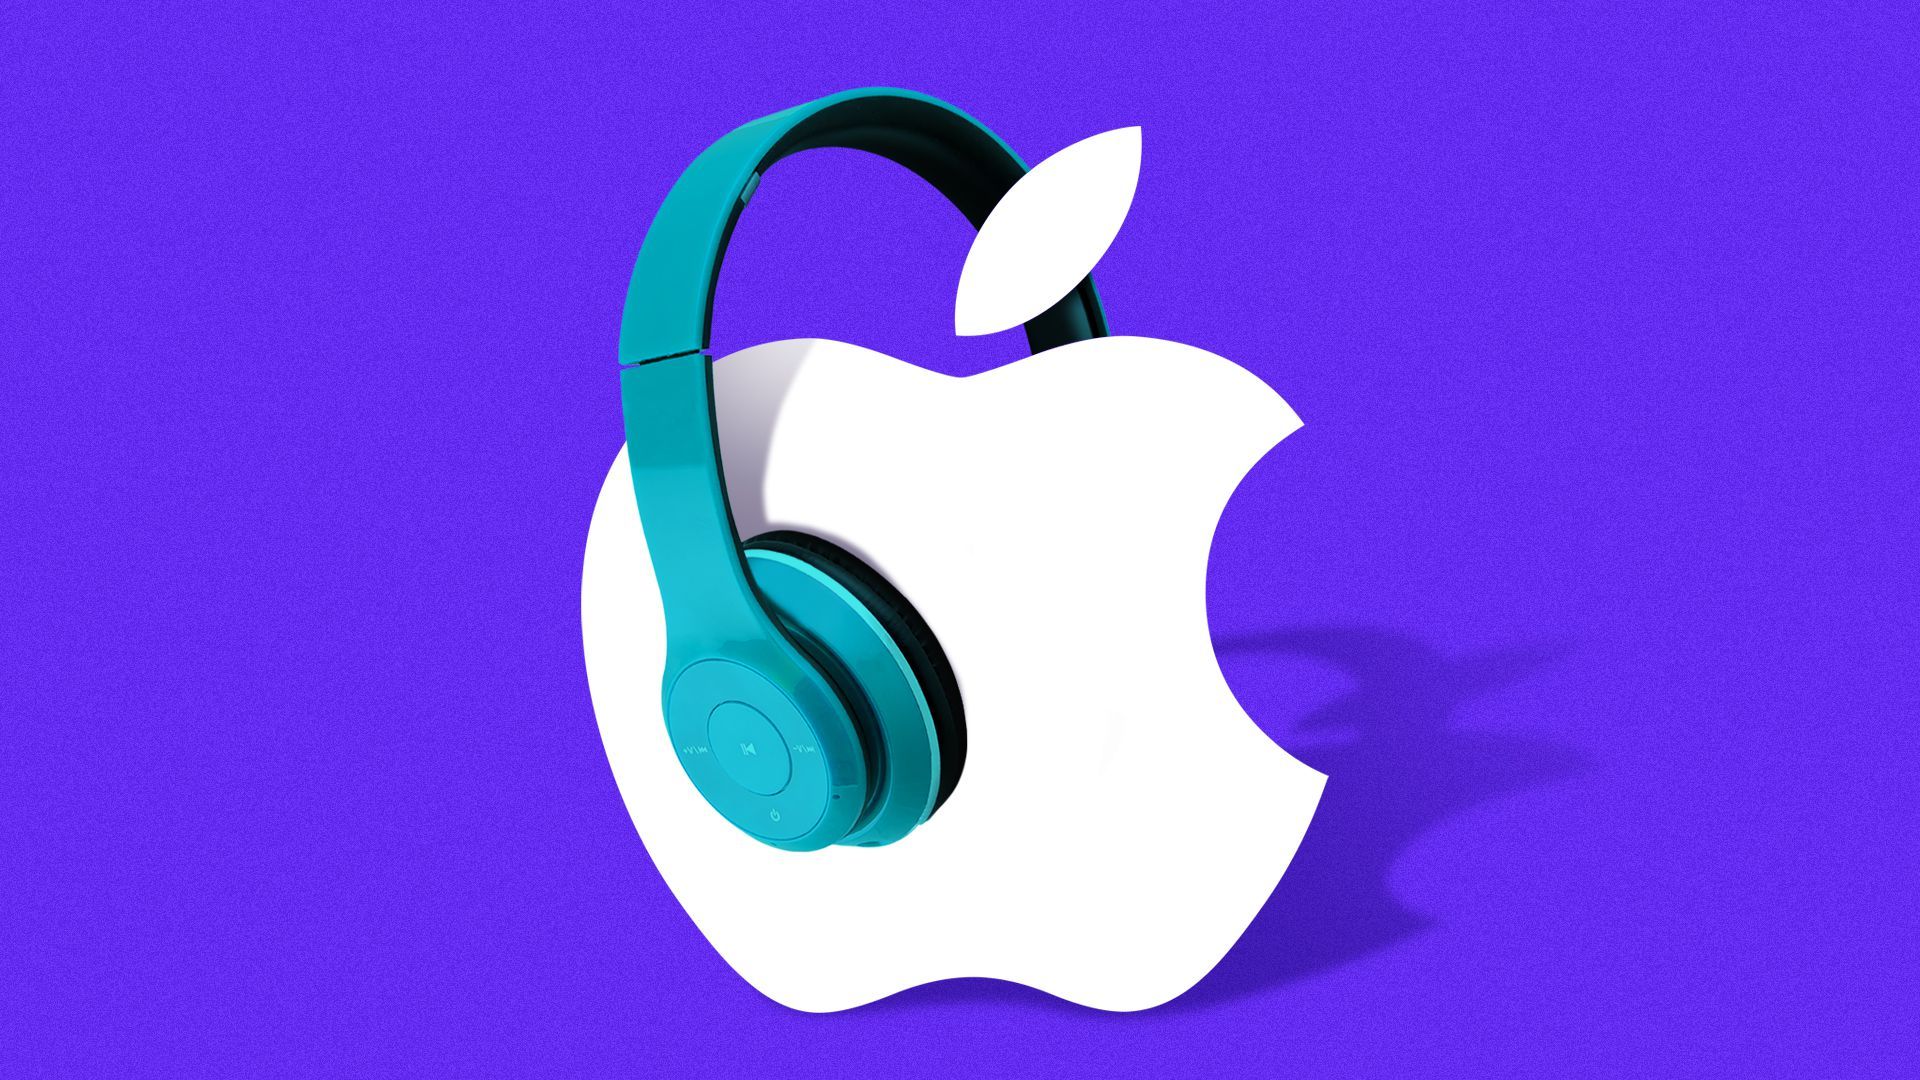 Illustration of a the Apple logo wearing headphones